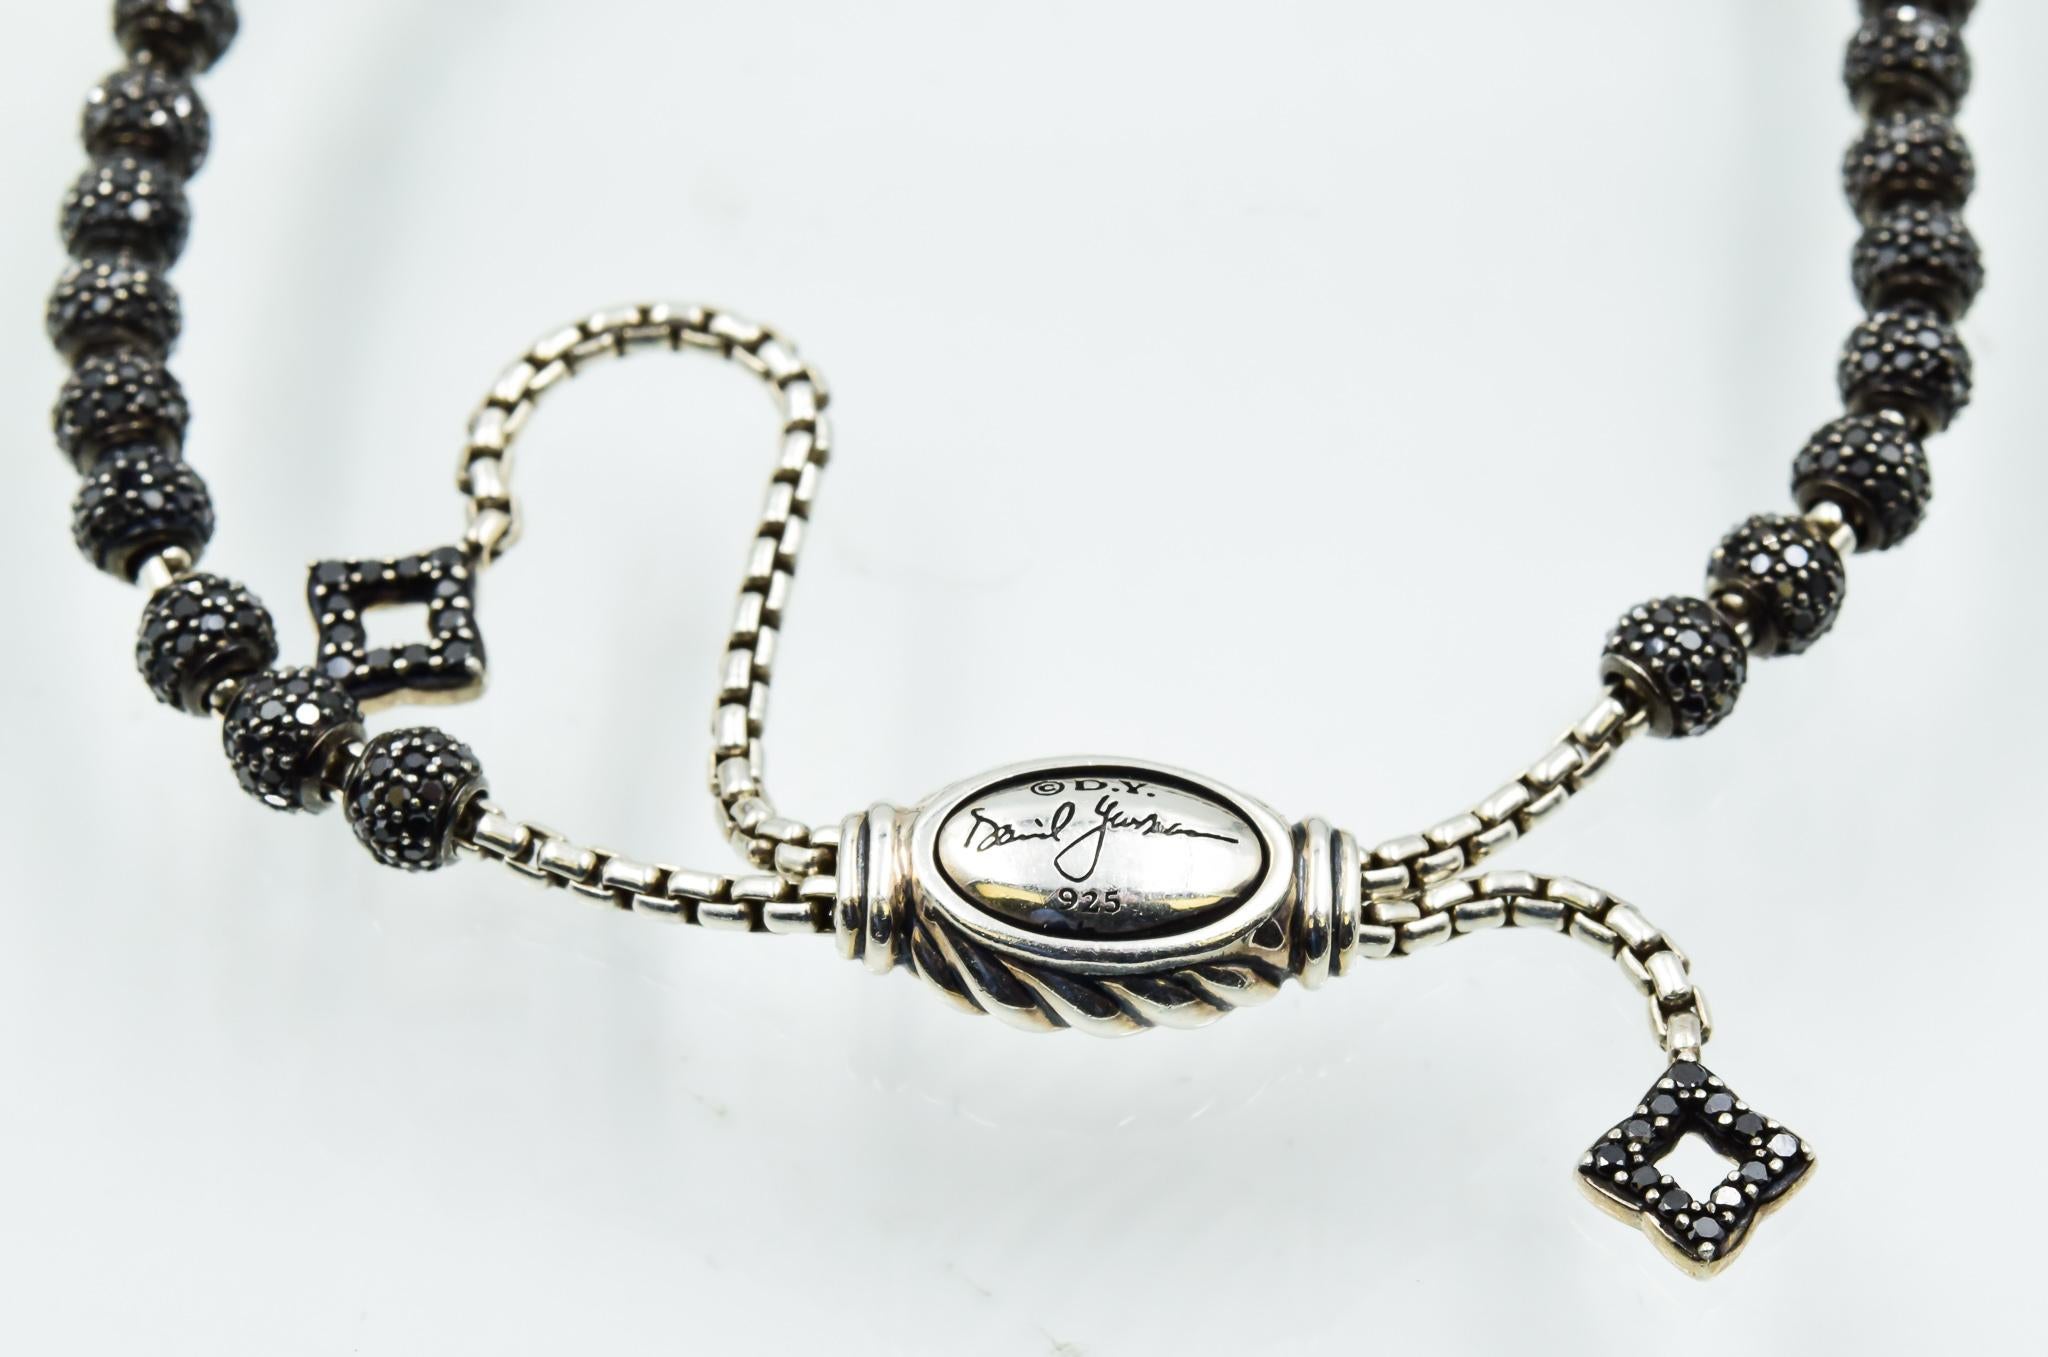 Details about David Yurman Petite Pave Black Diamond Bracelet, B12068DSBABD 2